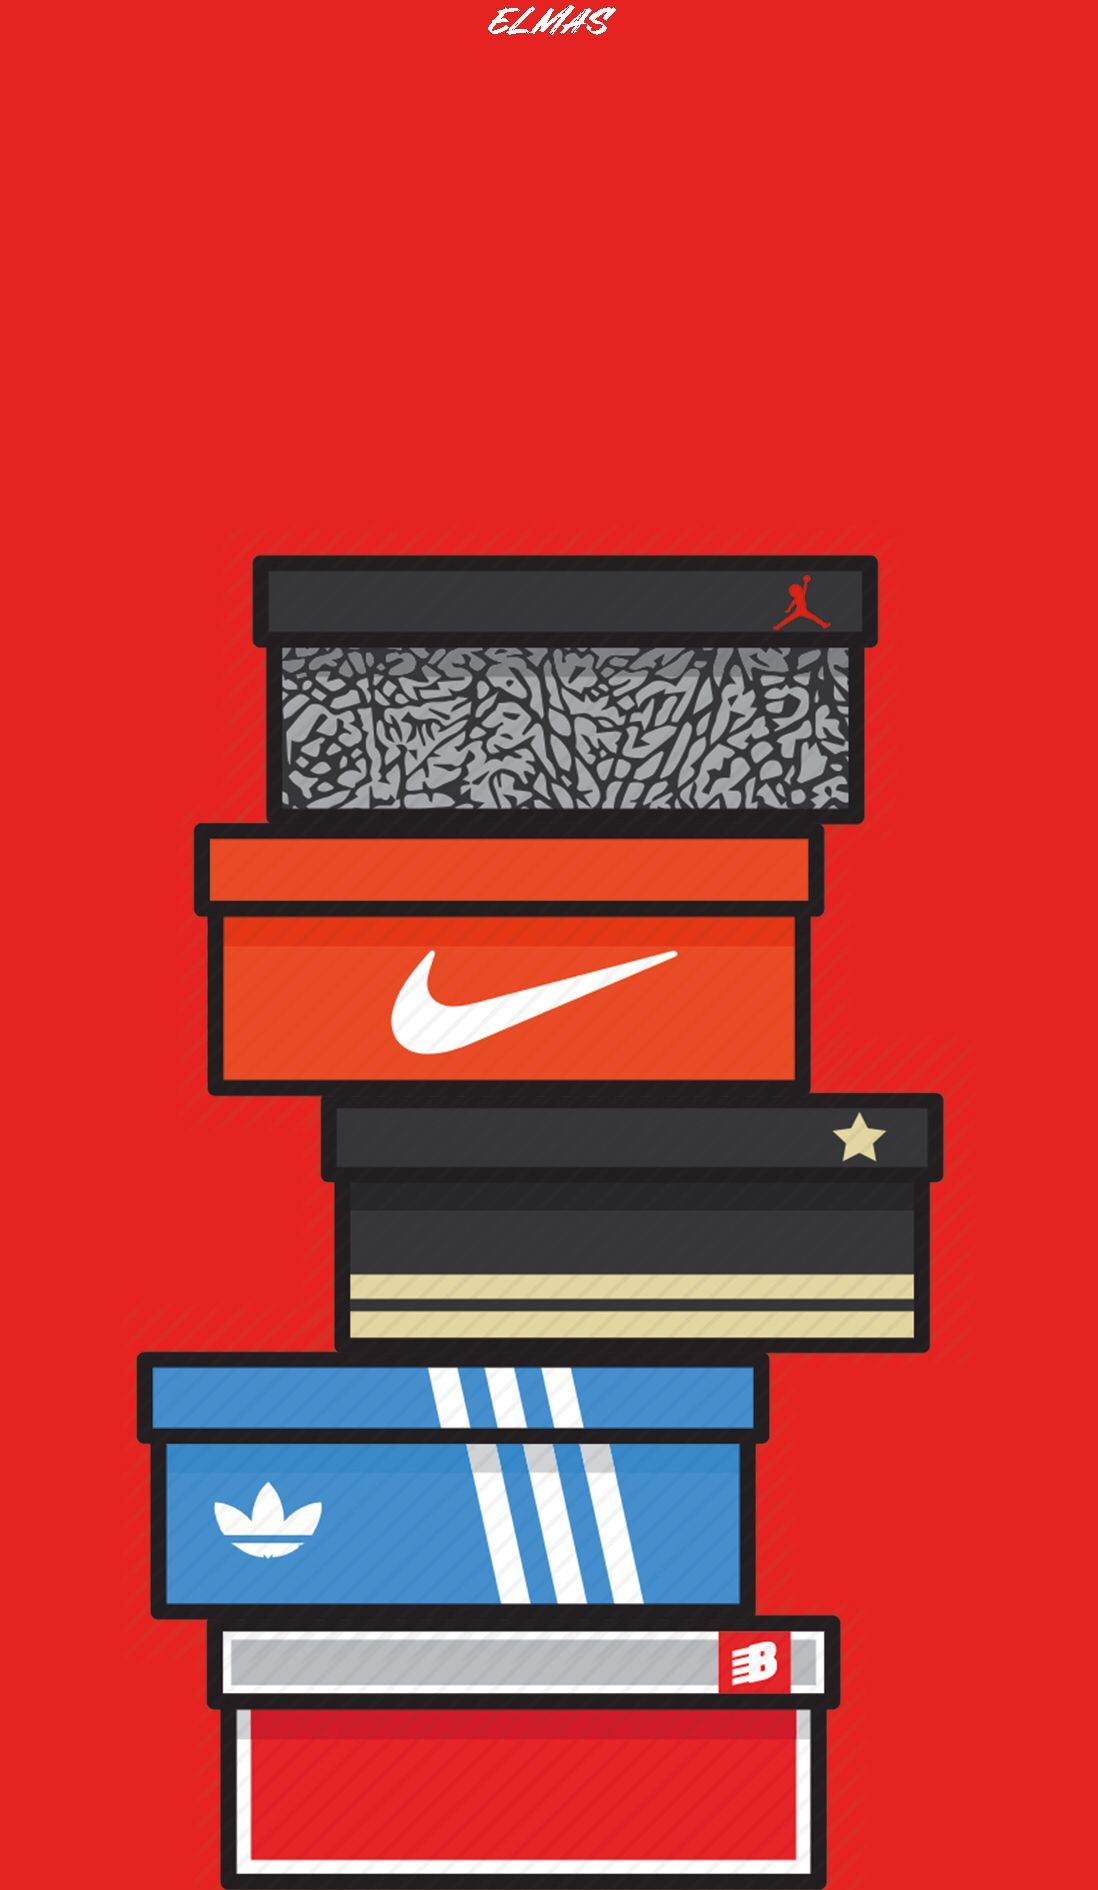 Nike Boxes Wallpaper Free Nike Boxes Background